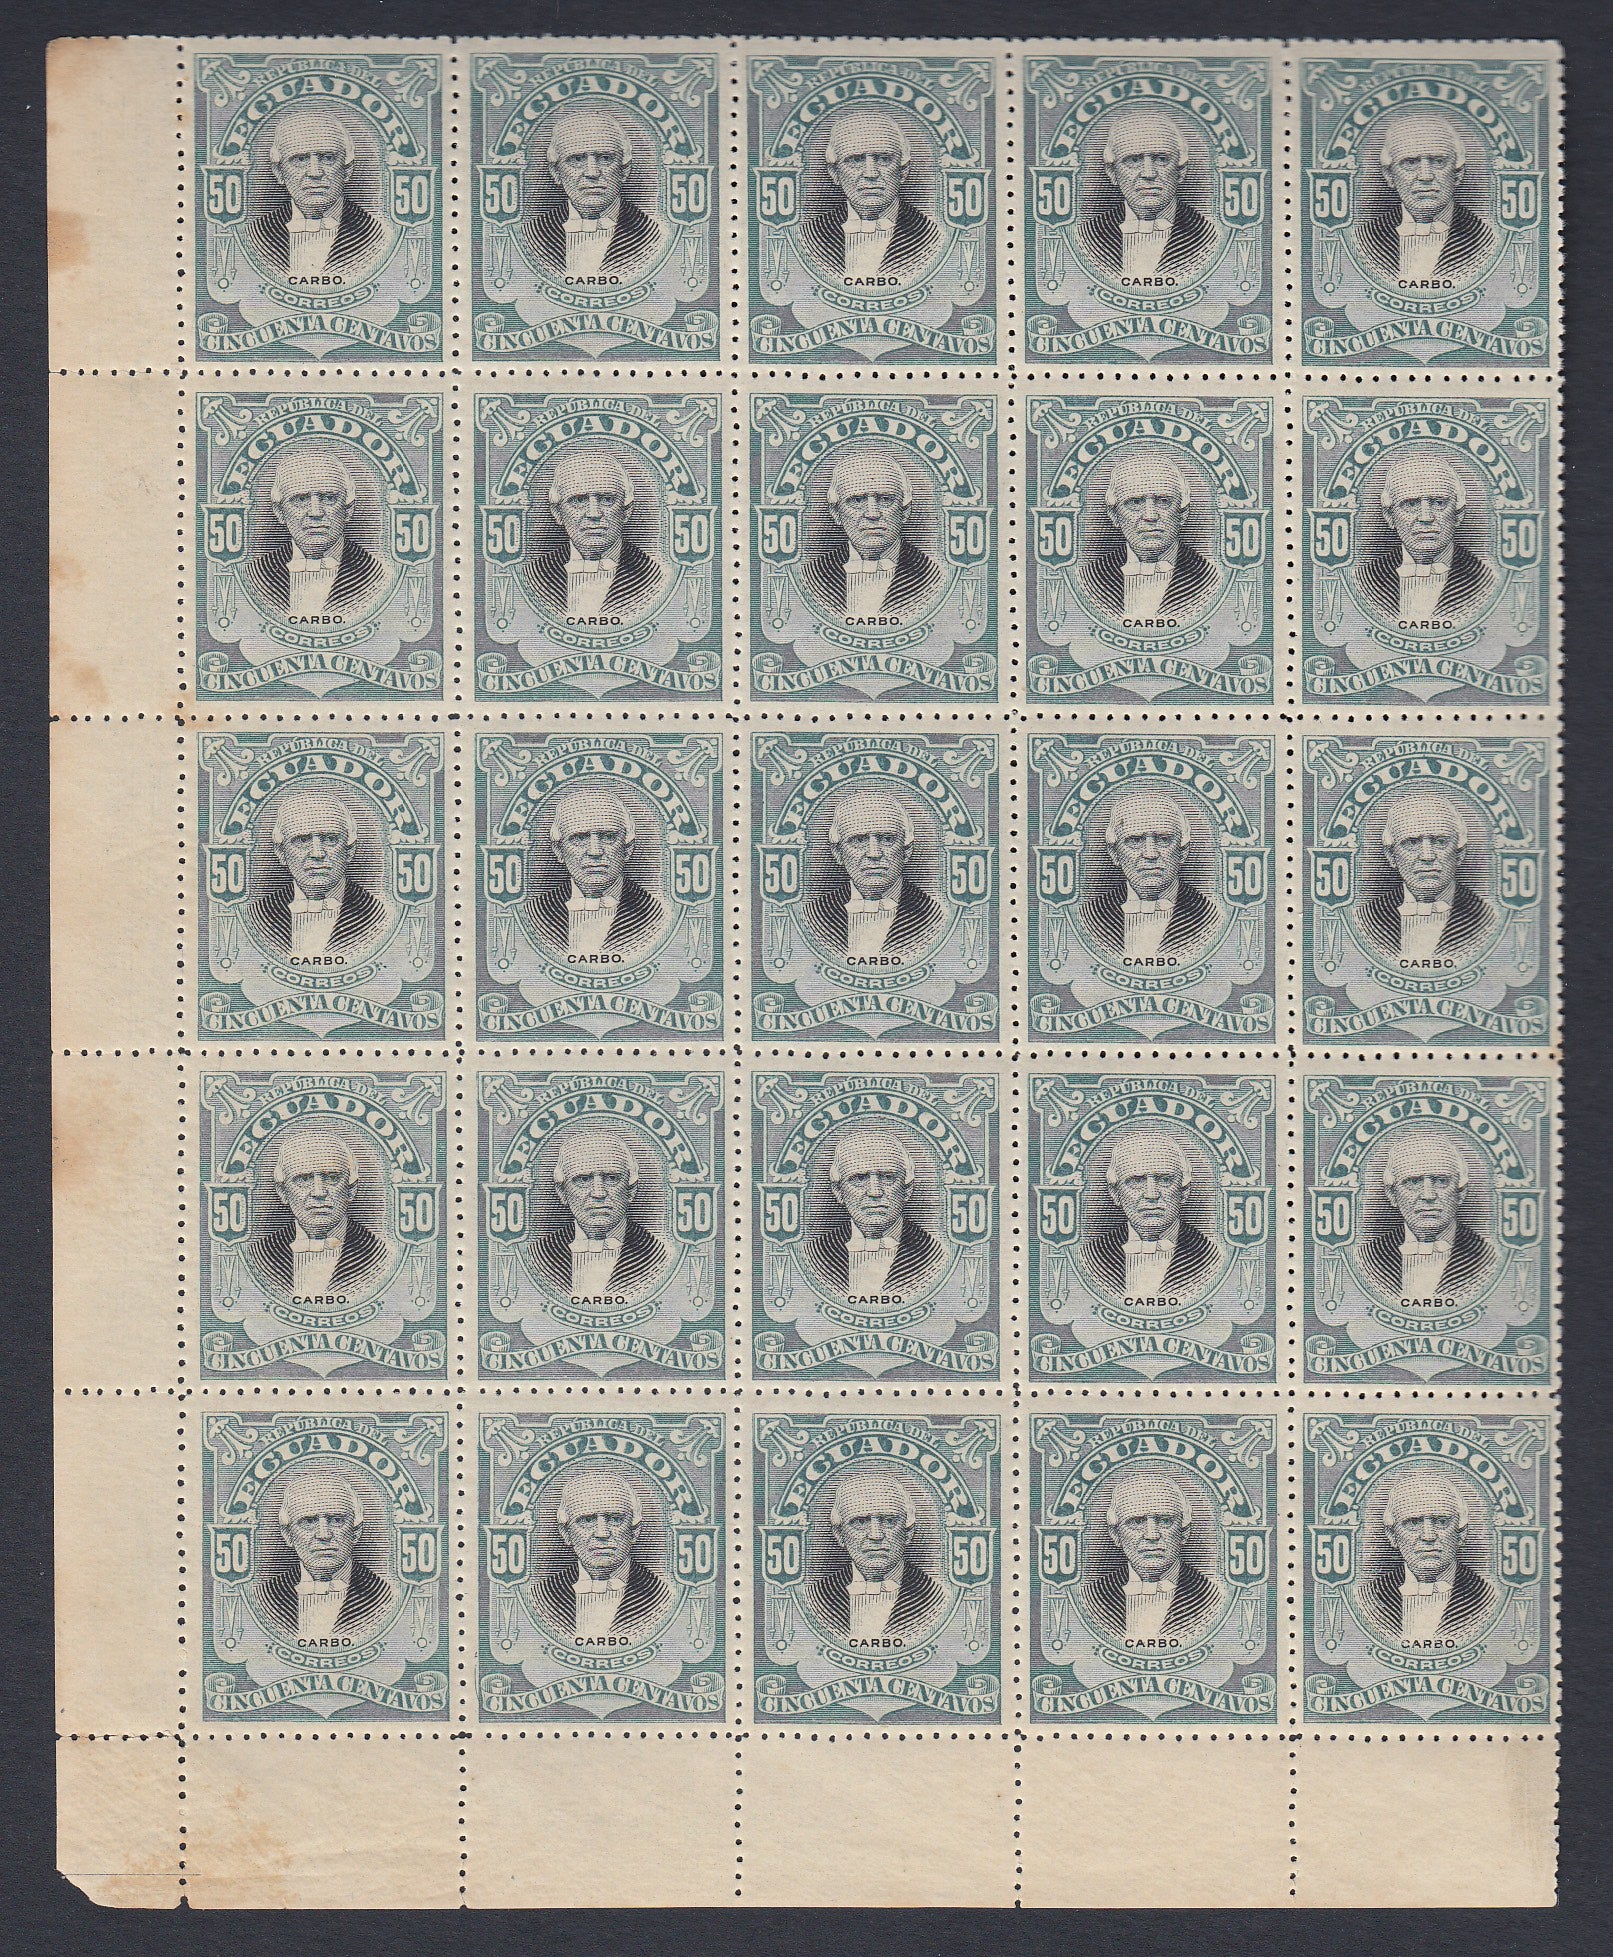 Ecuador 1901 50c Light Blue and Black Block of 25 MNH. Scott 150